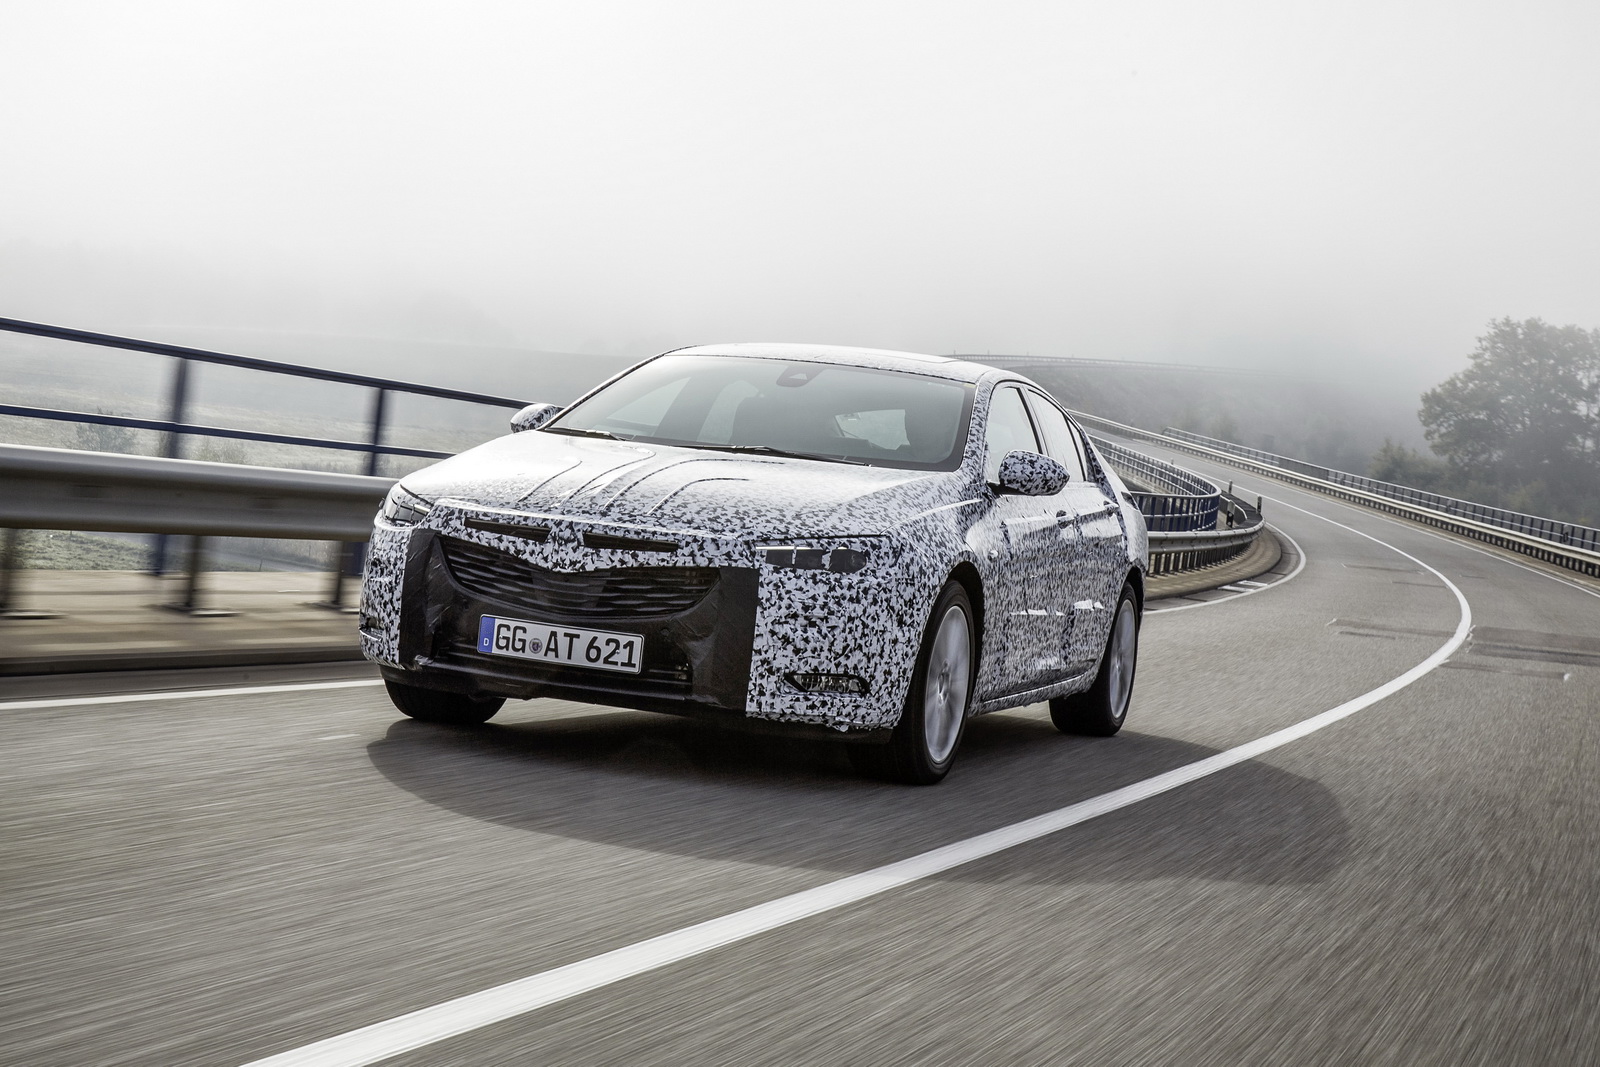 Opel Insignia Grand Sport – Lżejsza i zwinniejsza